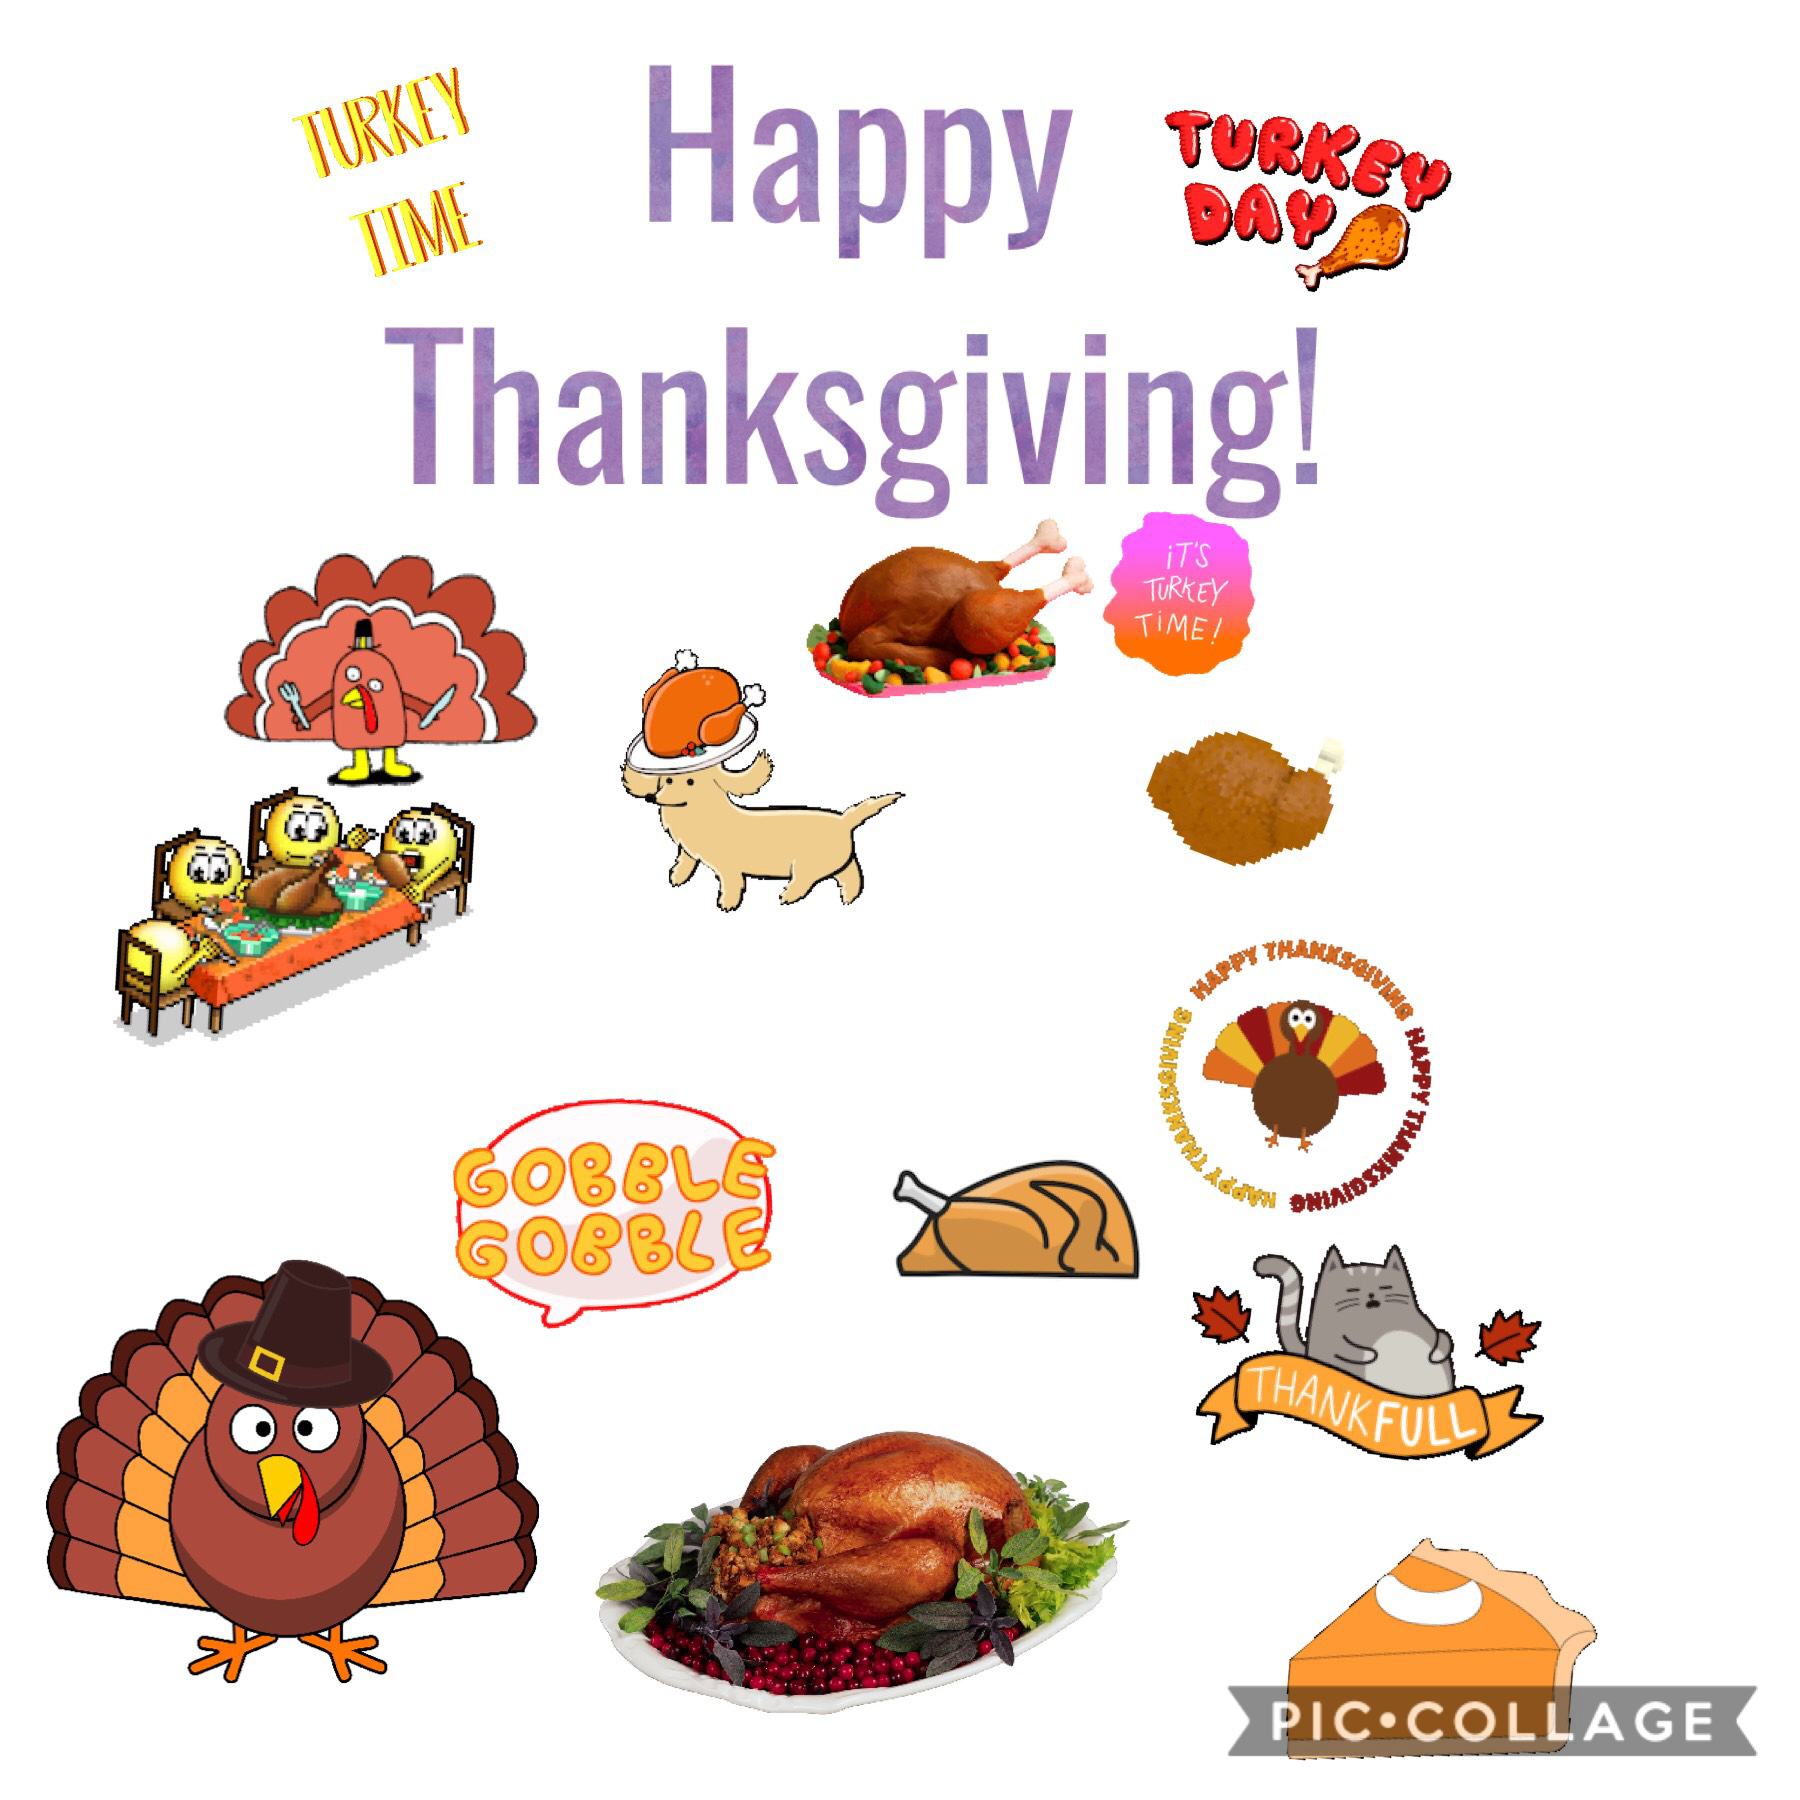 Happy Thanksgiving everyone!